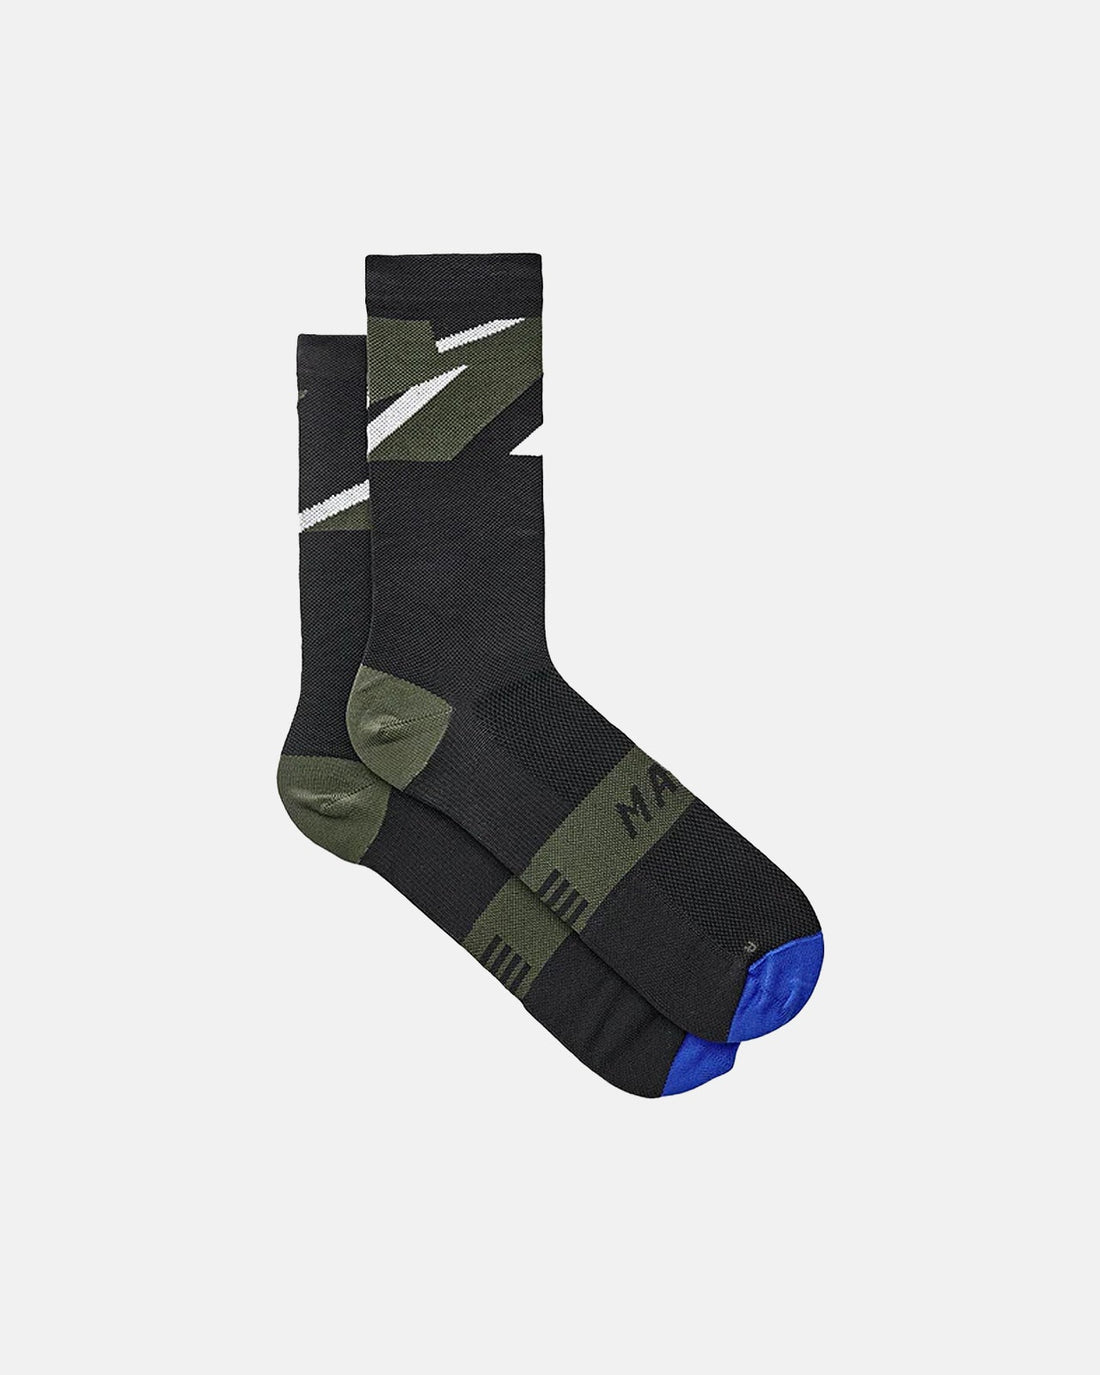 MAAP Evolve 3D Sock - Black/Olive